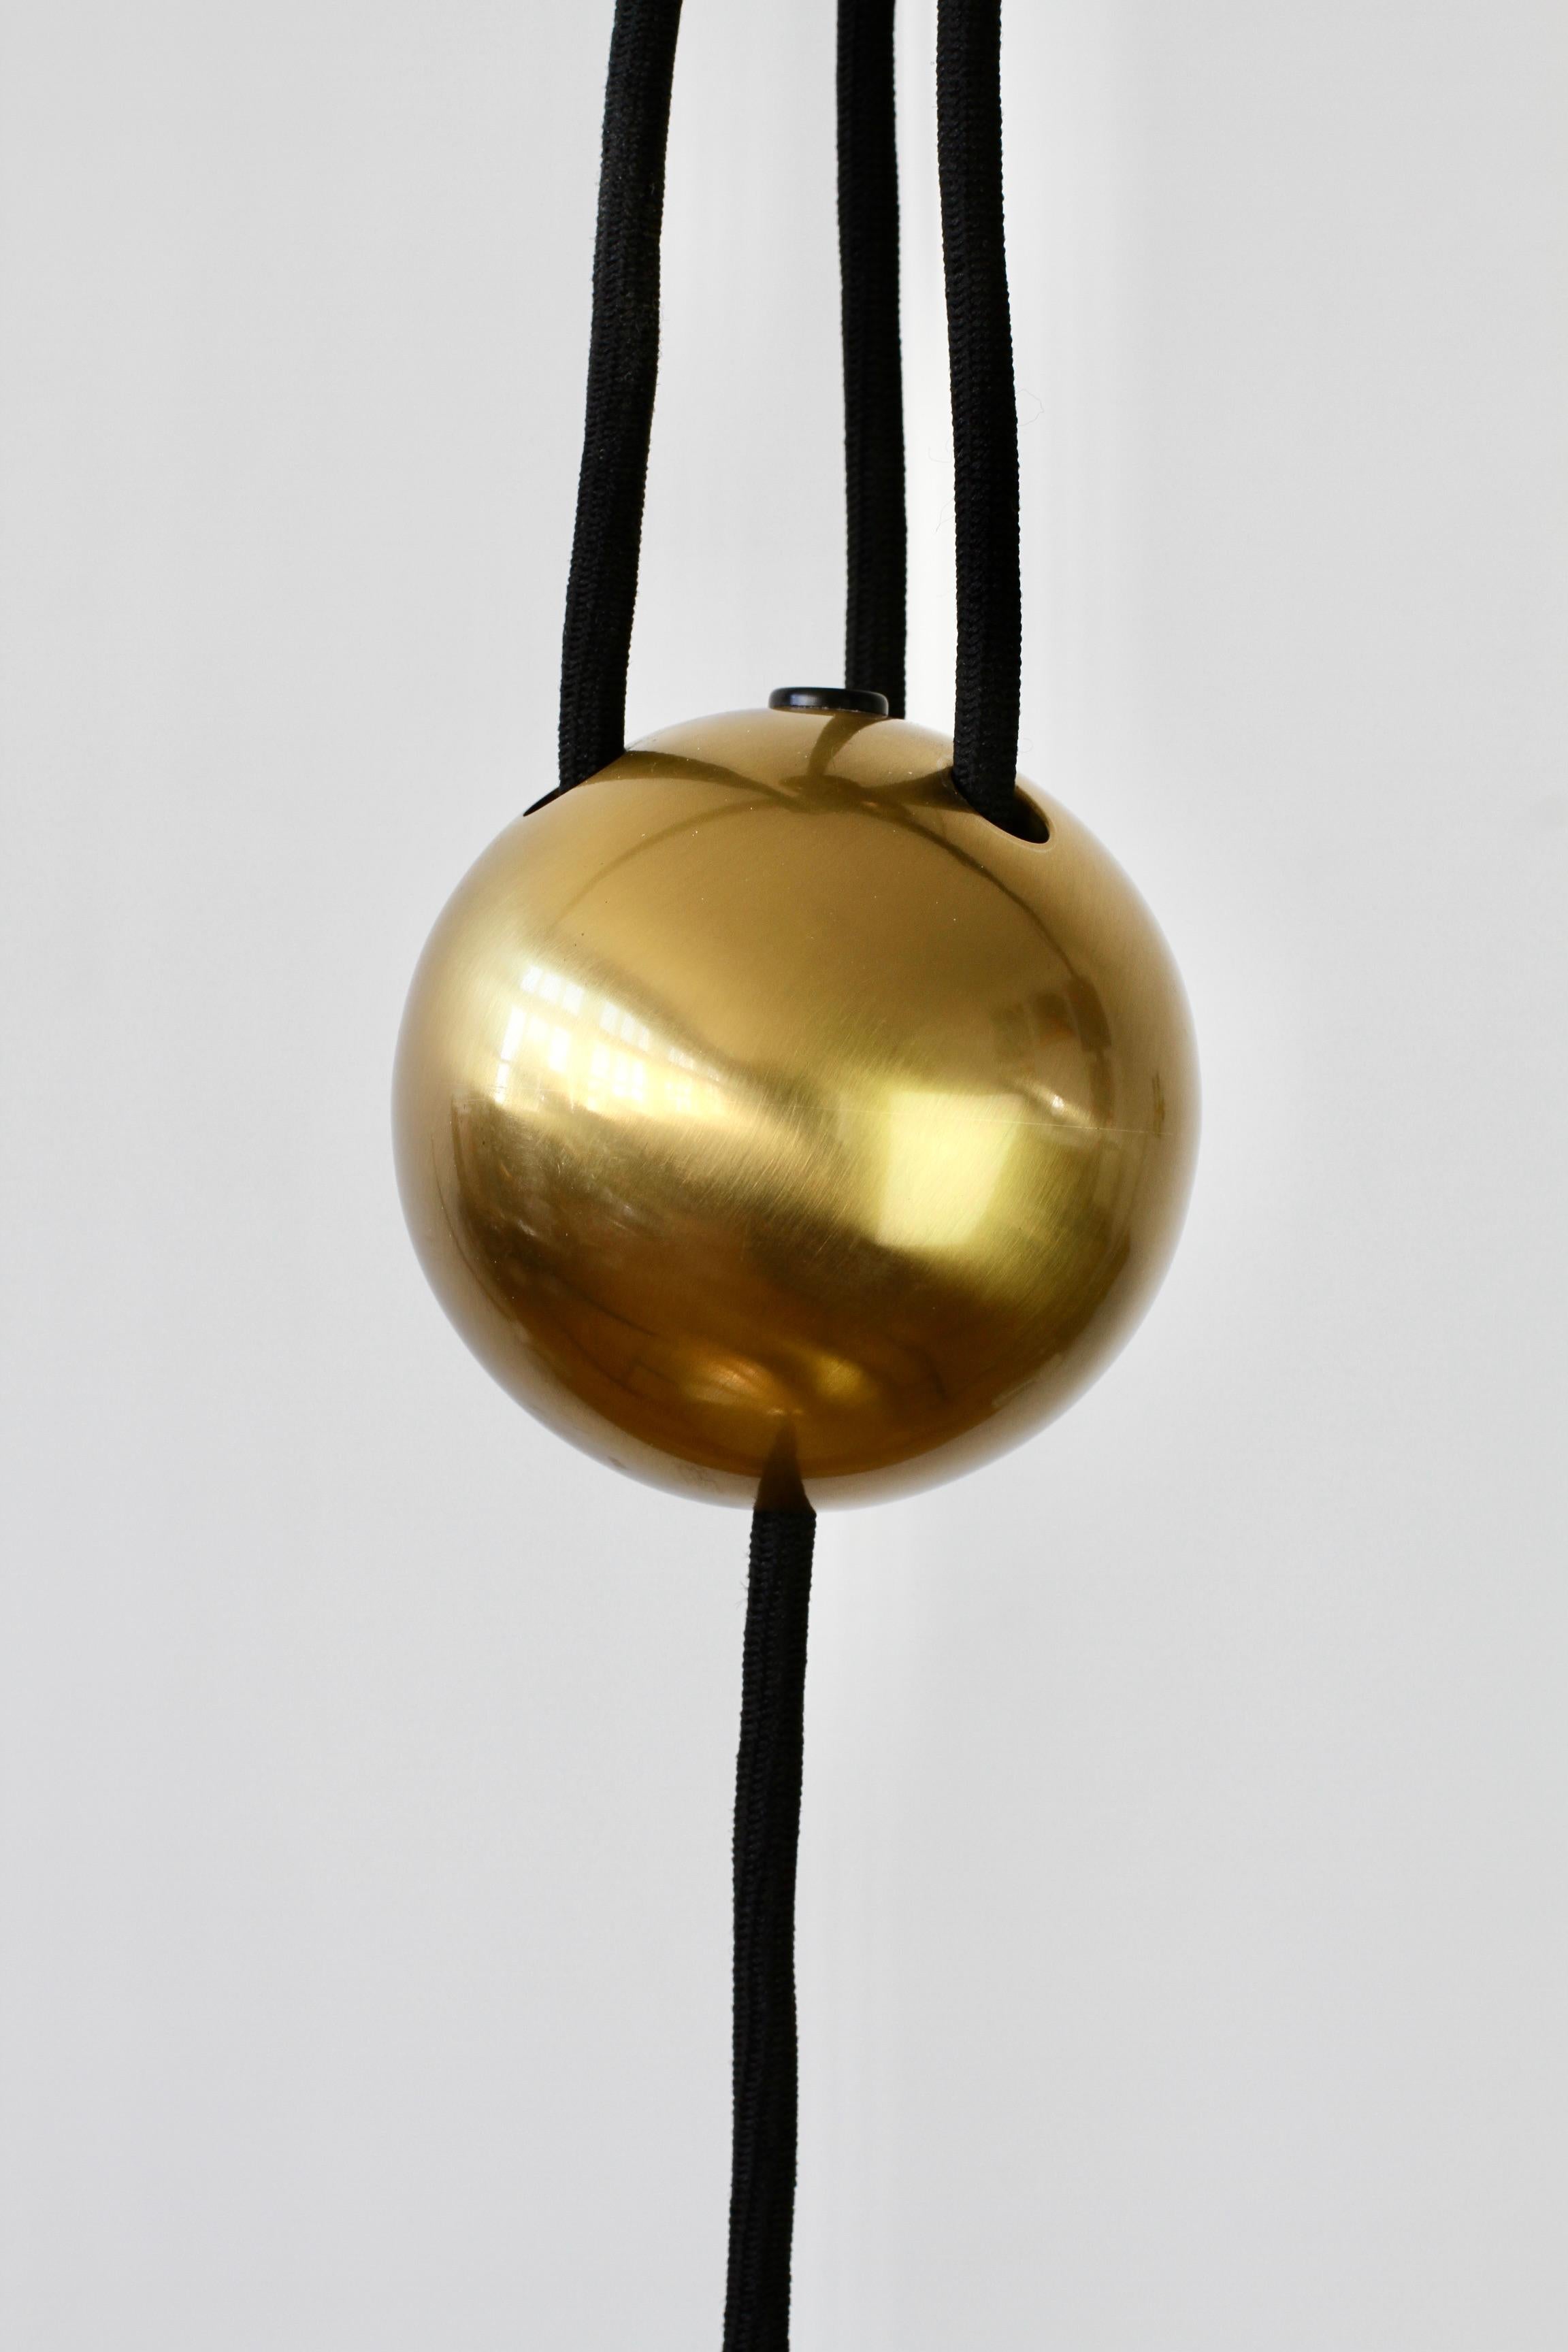 Florian Schulz Vintage Modernist Brass Counterbalanced Adjustable Pendant Light For Sale 3